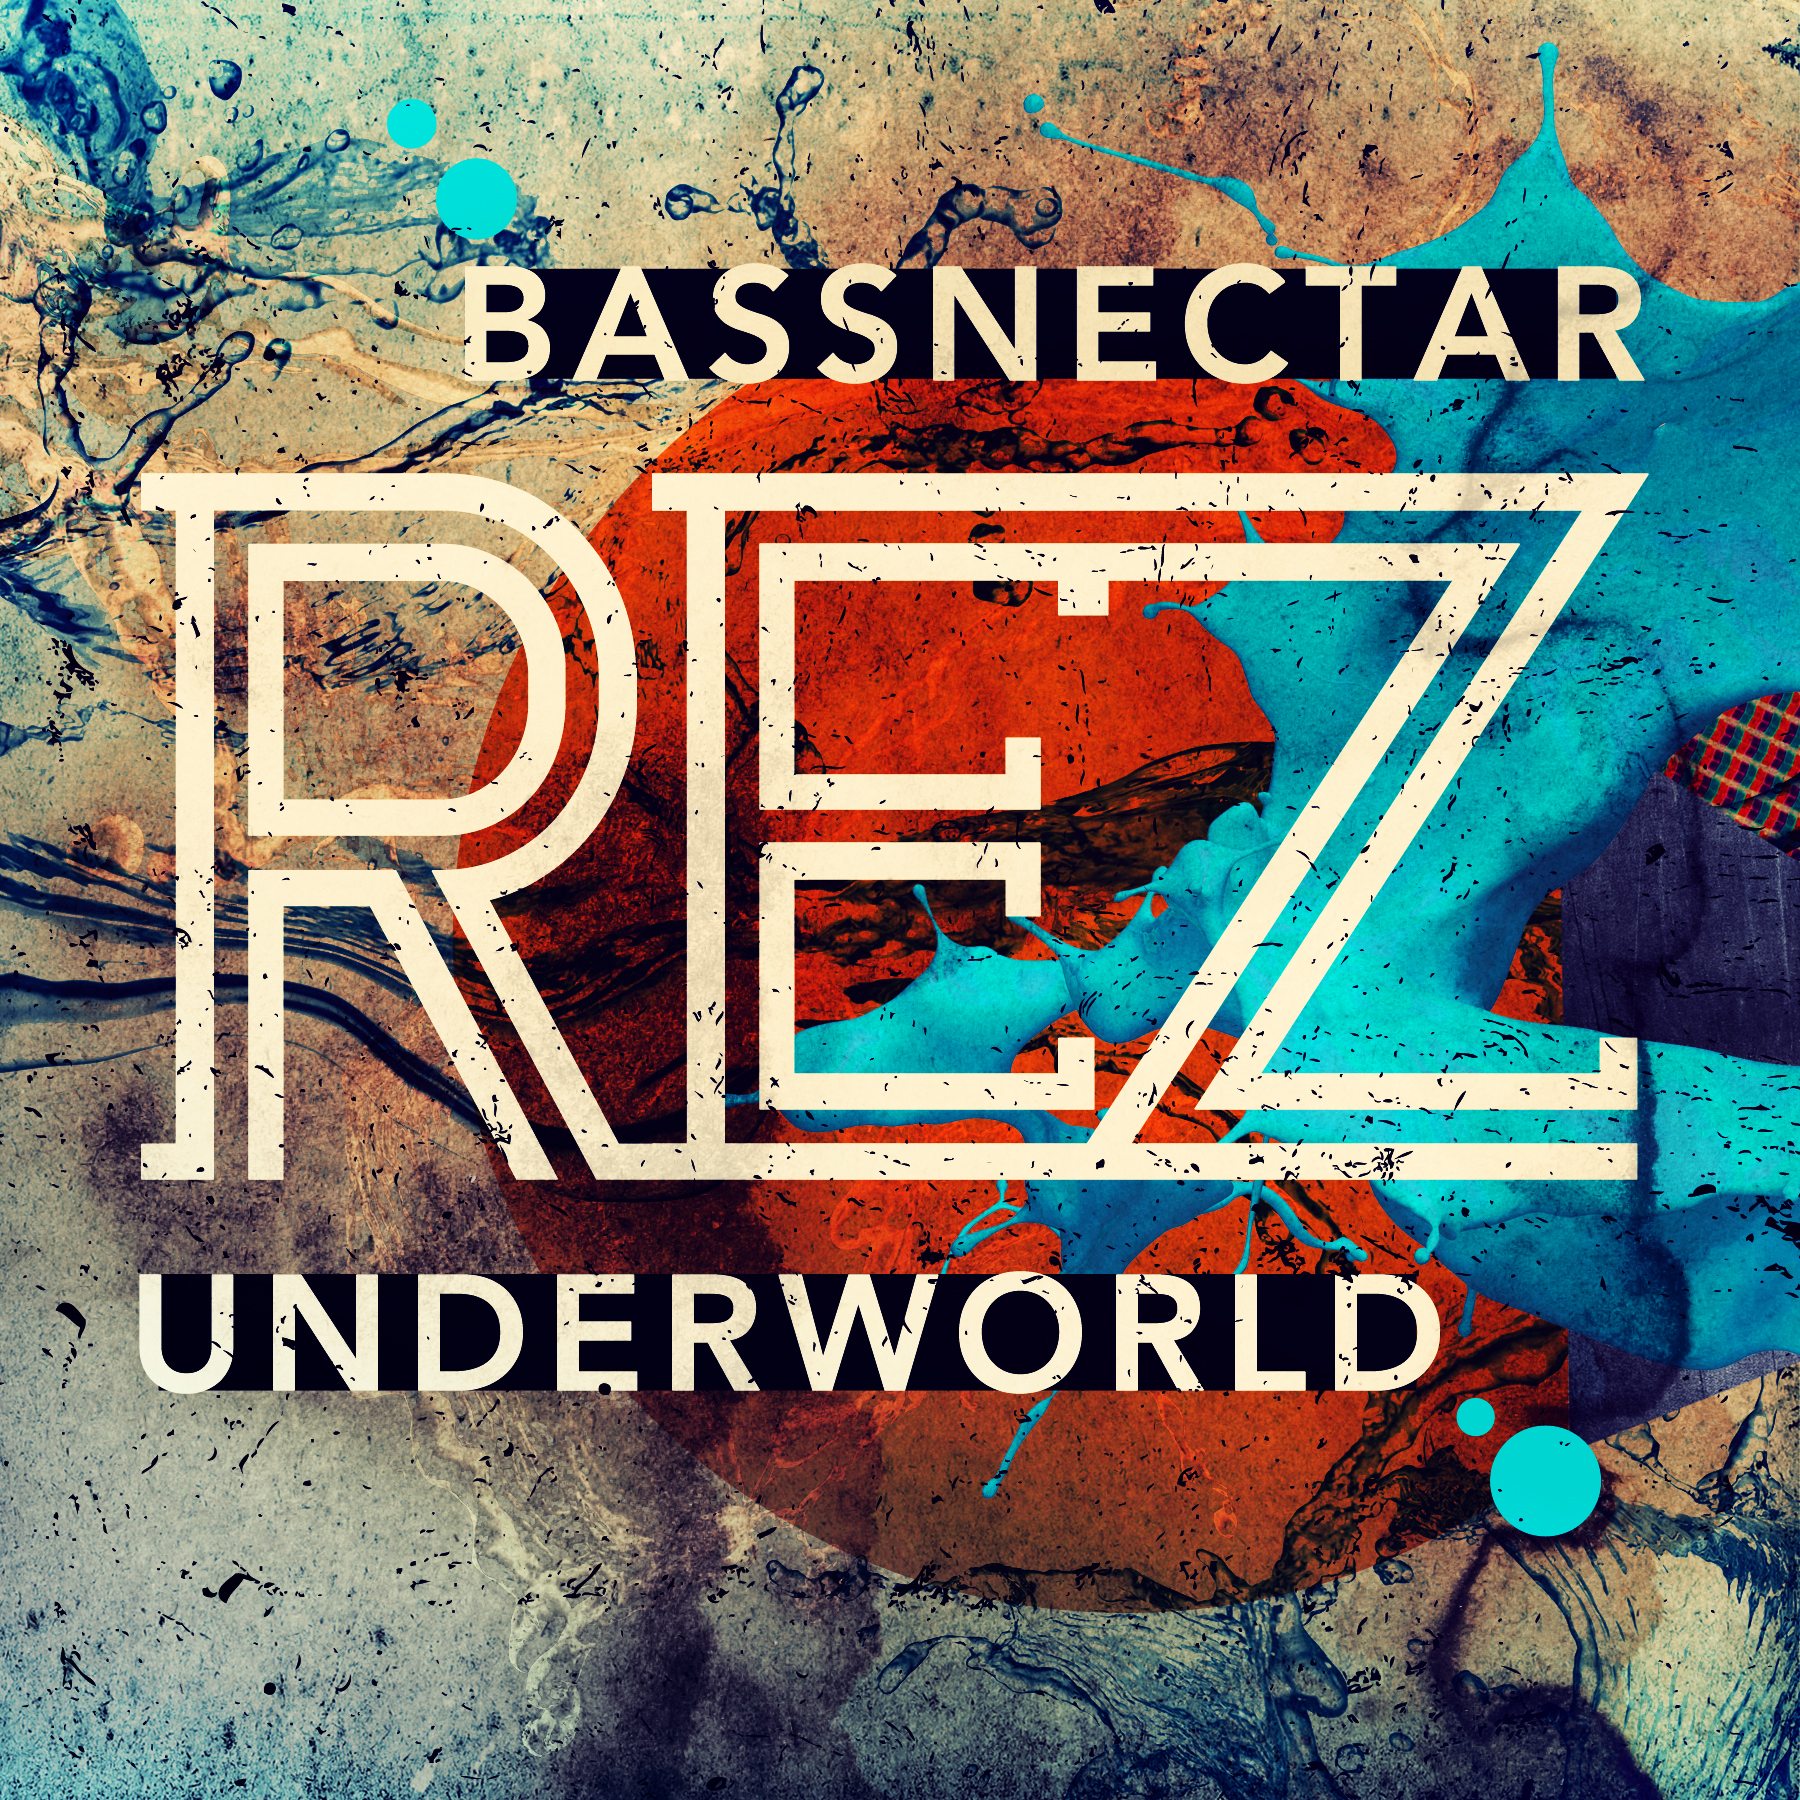 Underworld – Rez (Bassnectar Remix) [Dubstep]: Pre-Order It Today